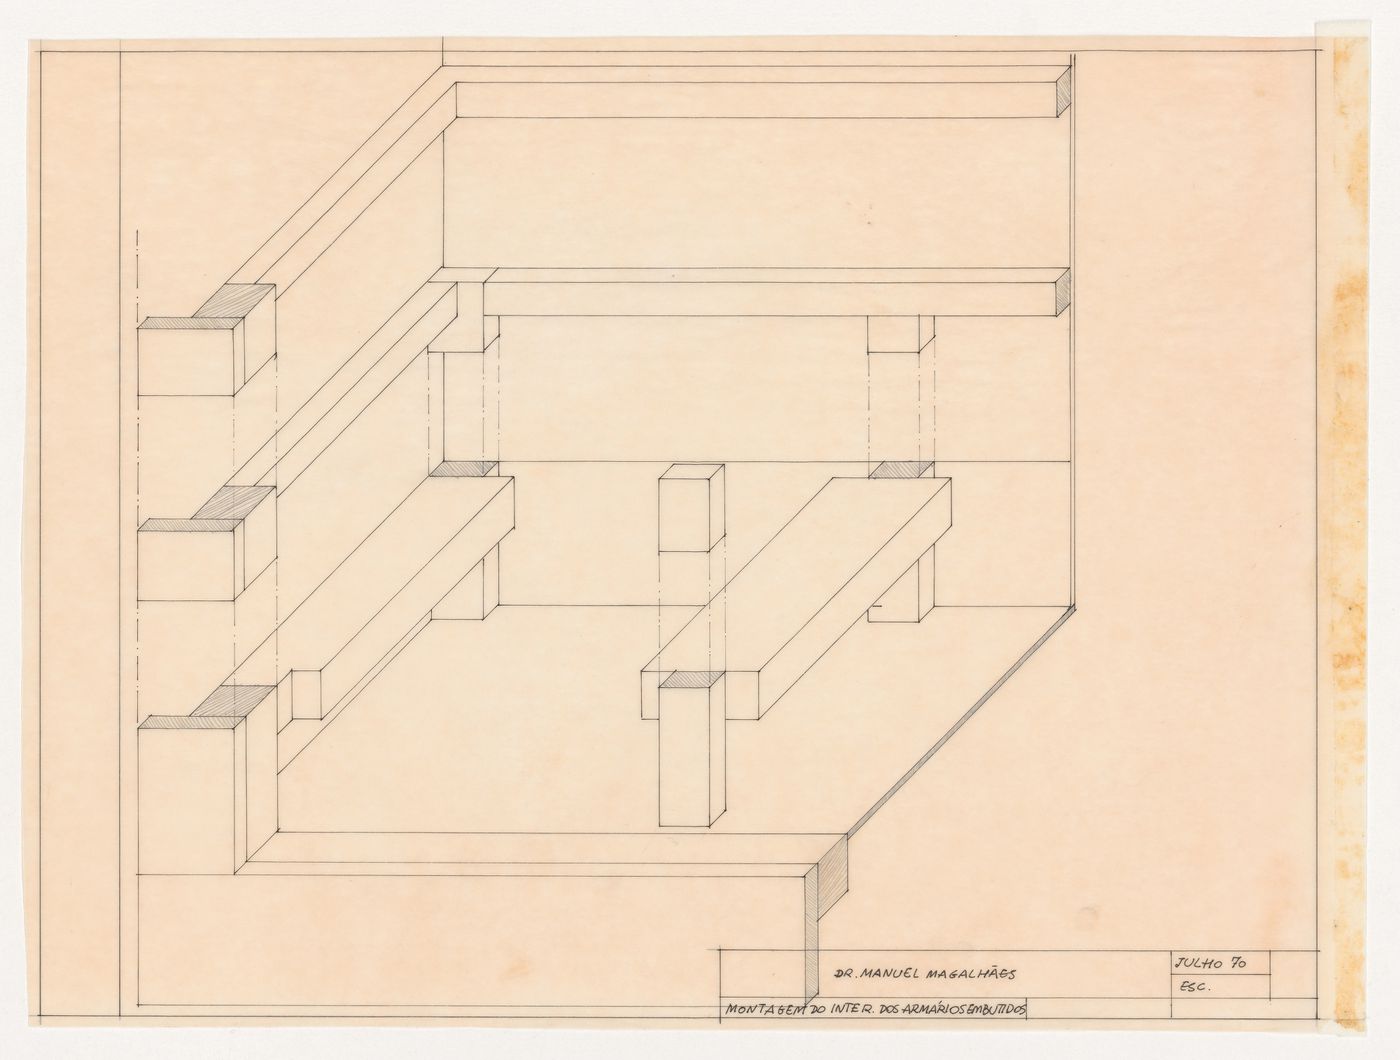 Installation diagram for built-in cabinets for Casa Manuel Magalhães, Porto